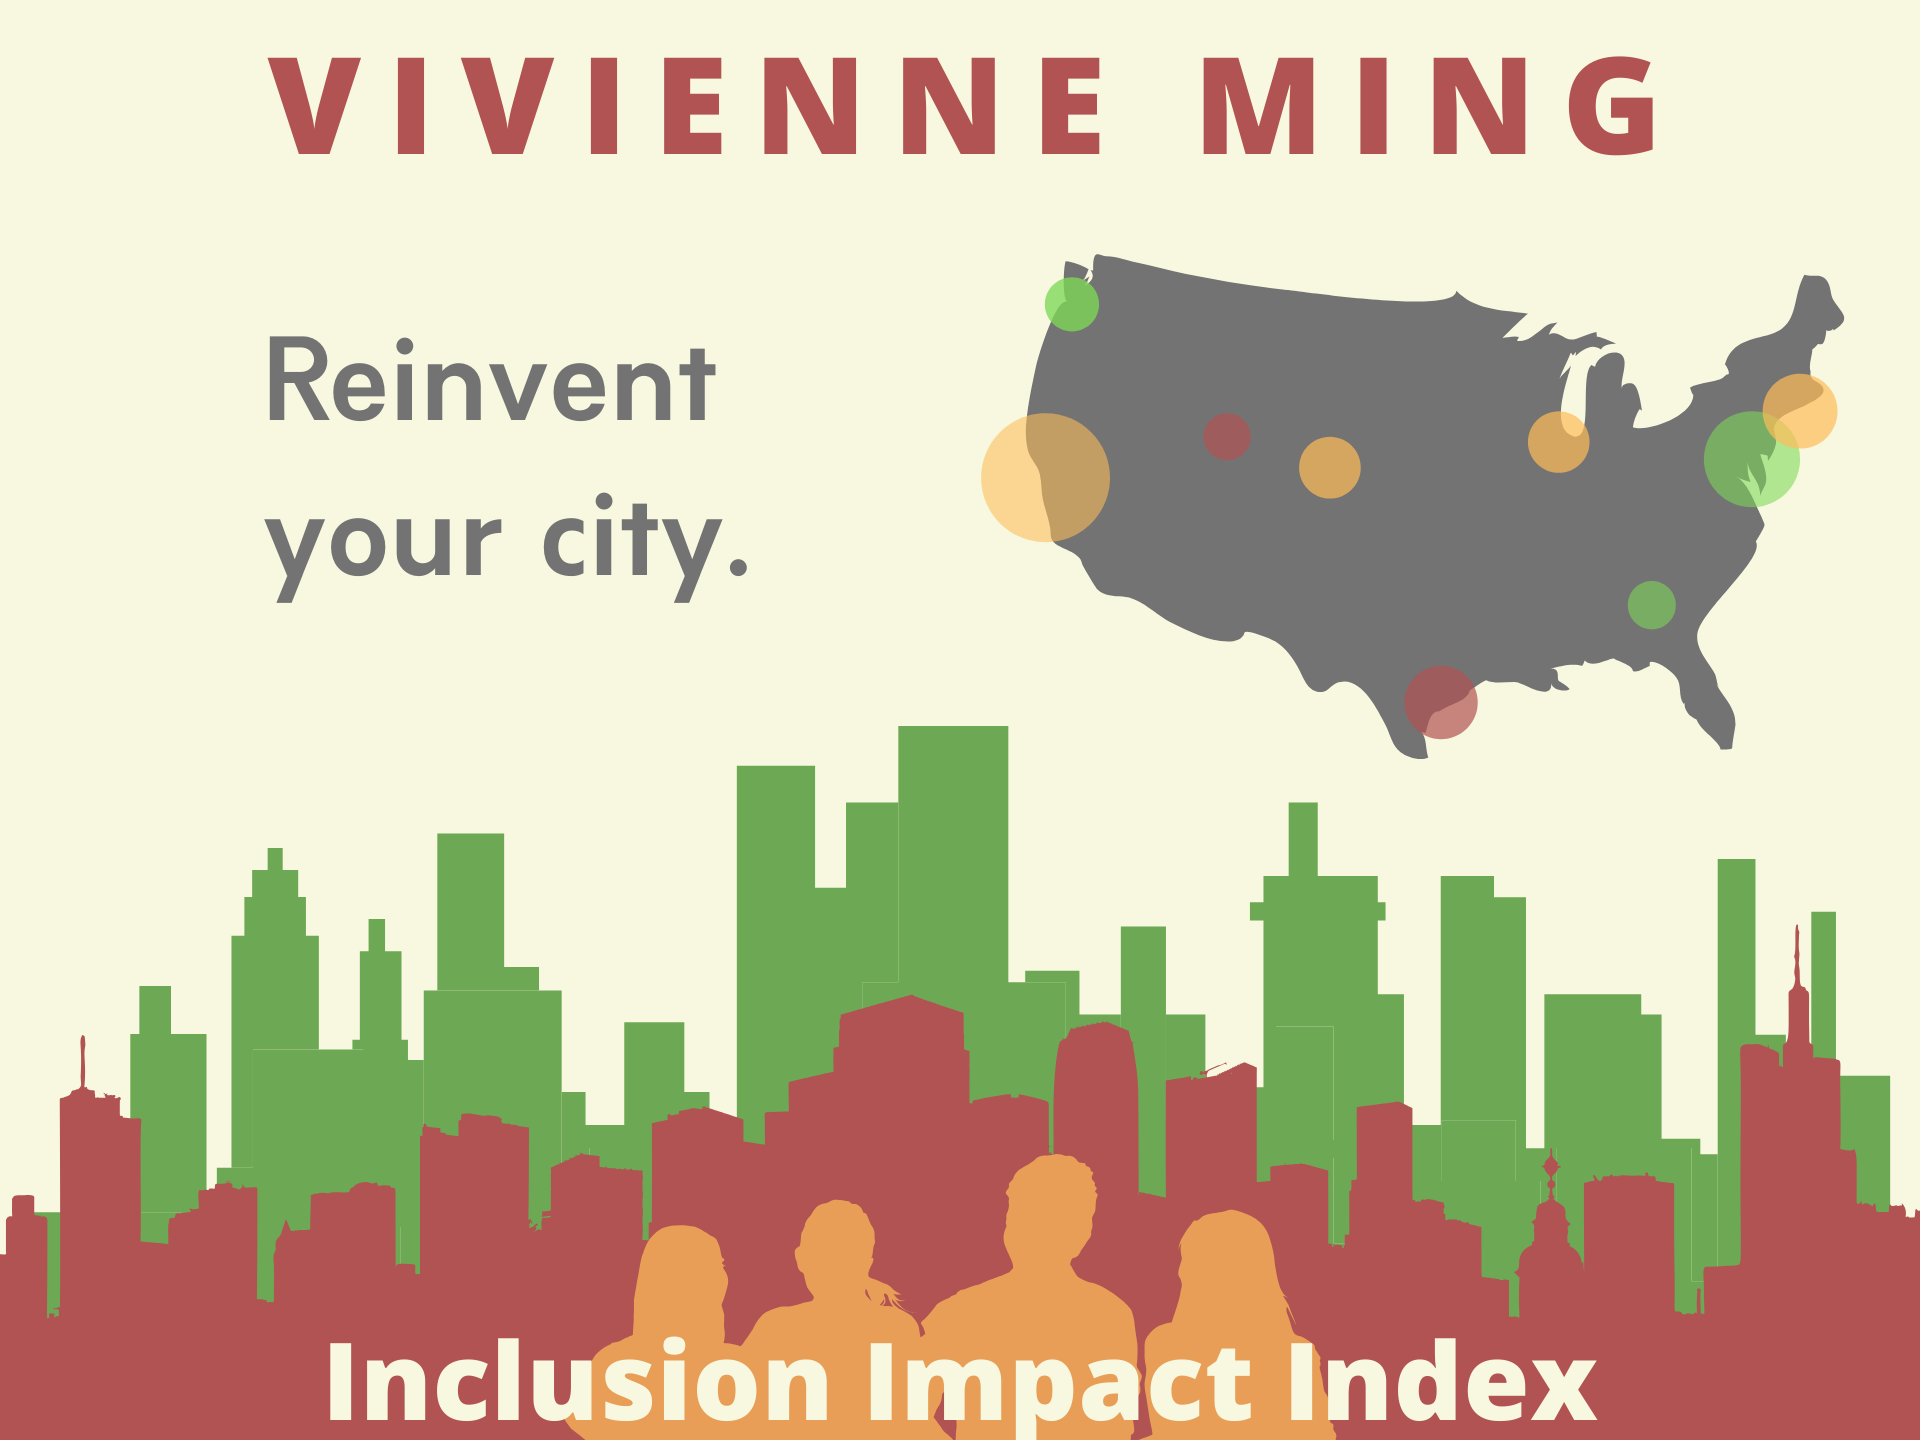 The Inclusion Impact Index